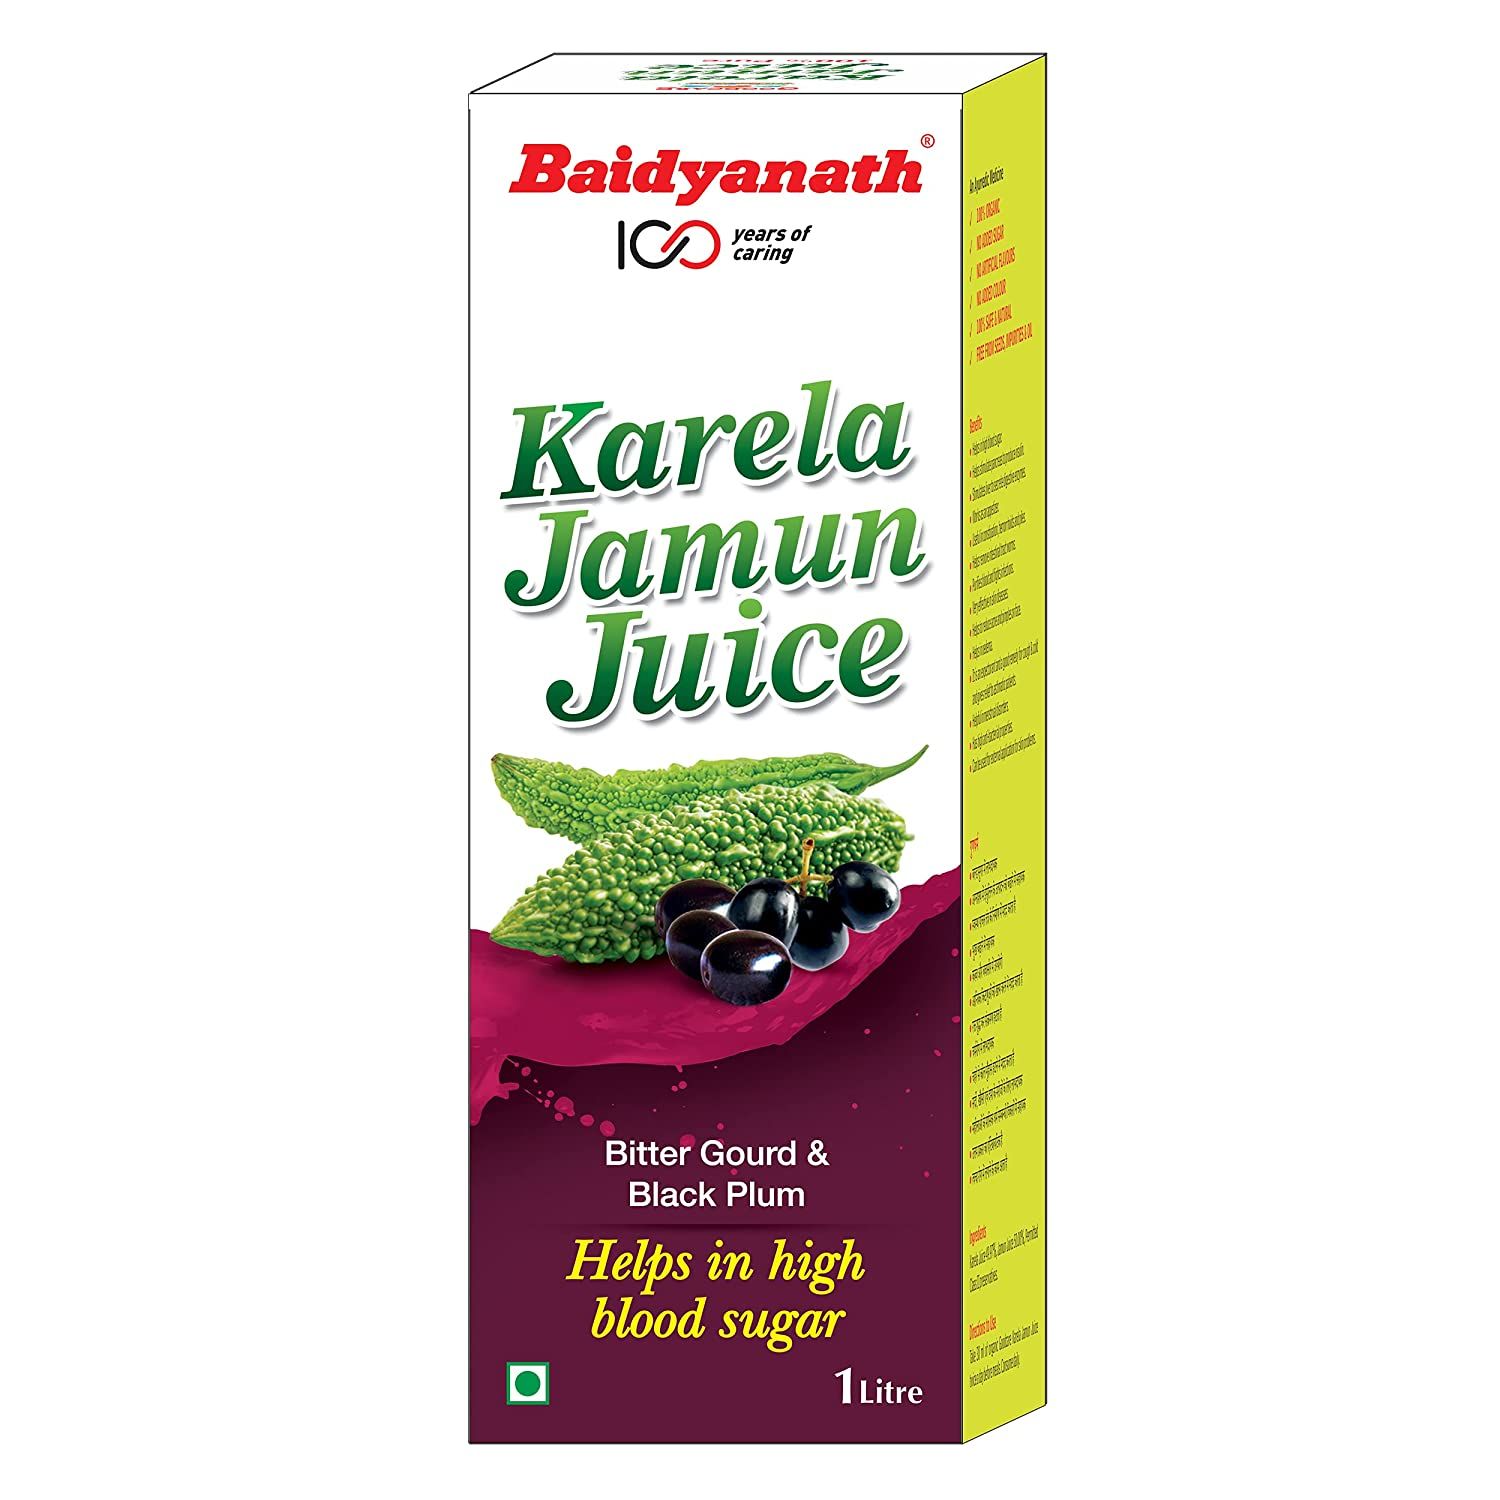 Baidyanath Karela Jamun Juice Image